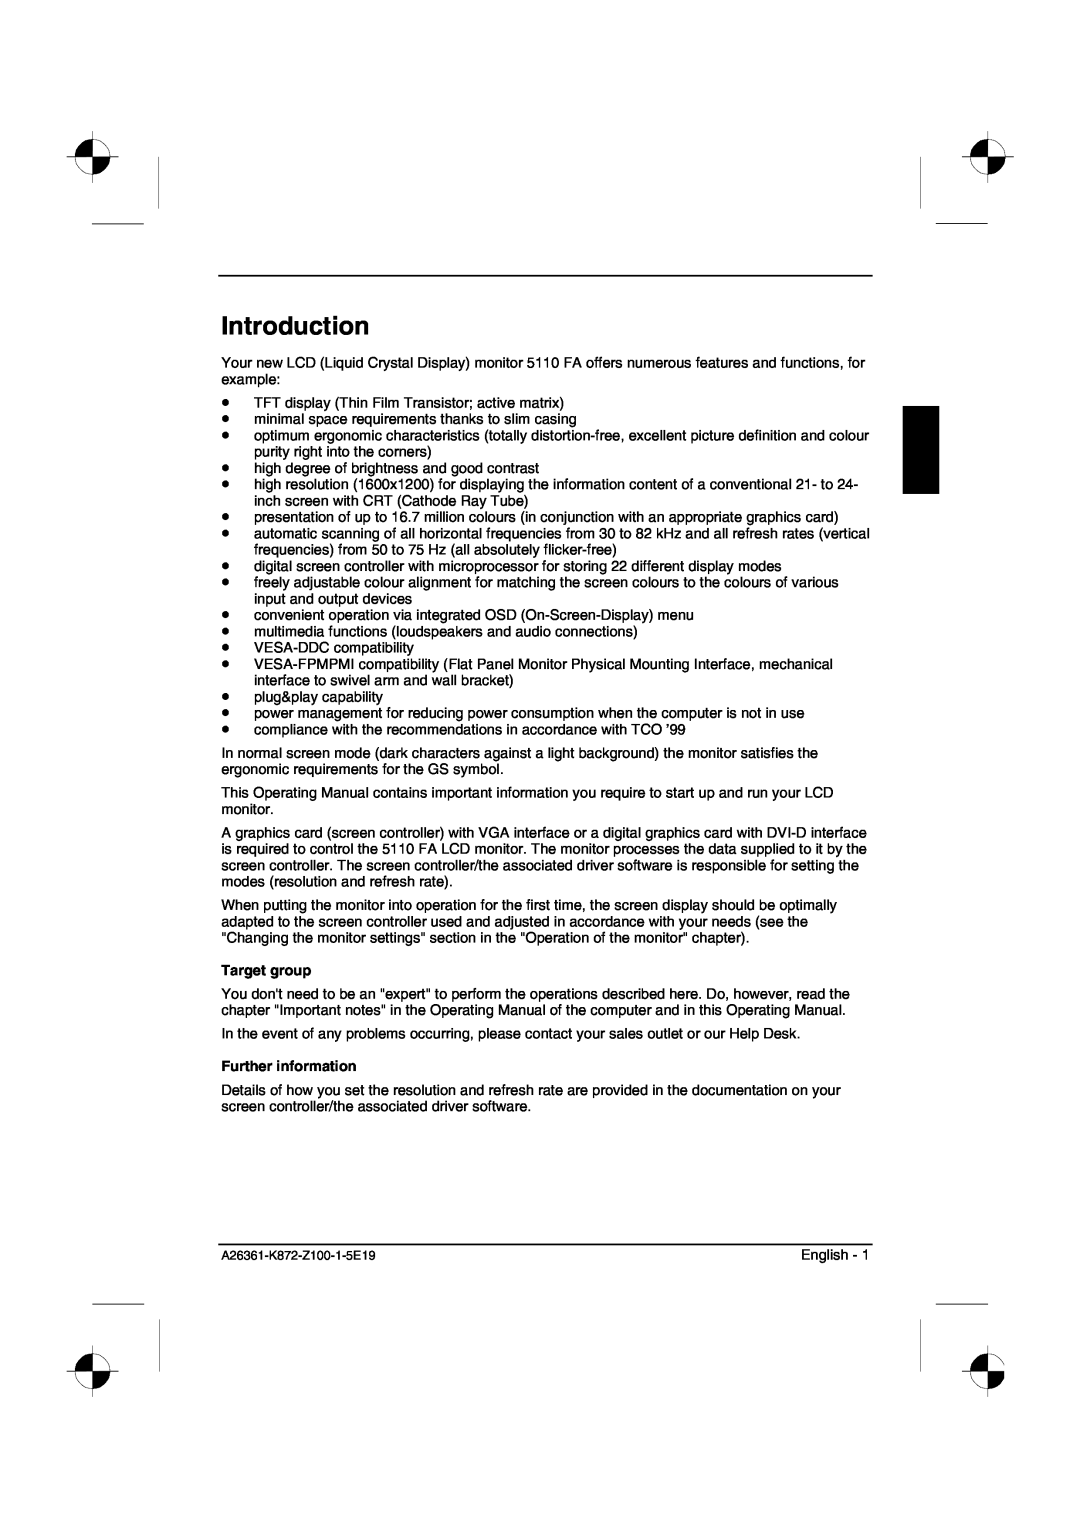 Fujitsu Siemens Computers 5110 FA manual Introduction, Target group, Further information 